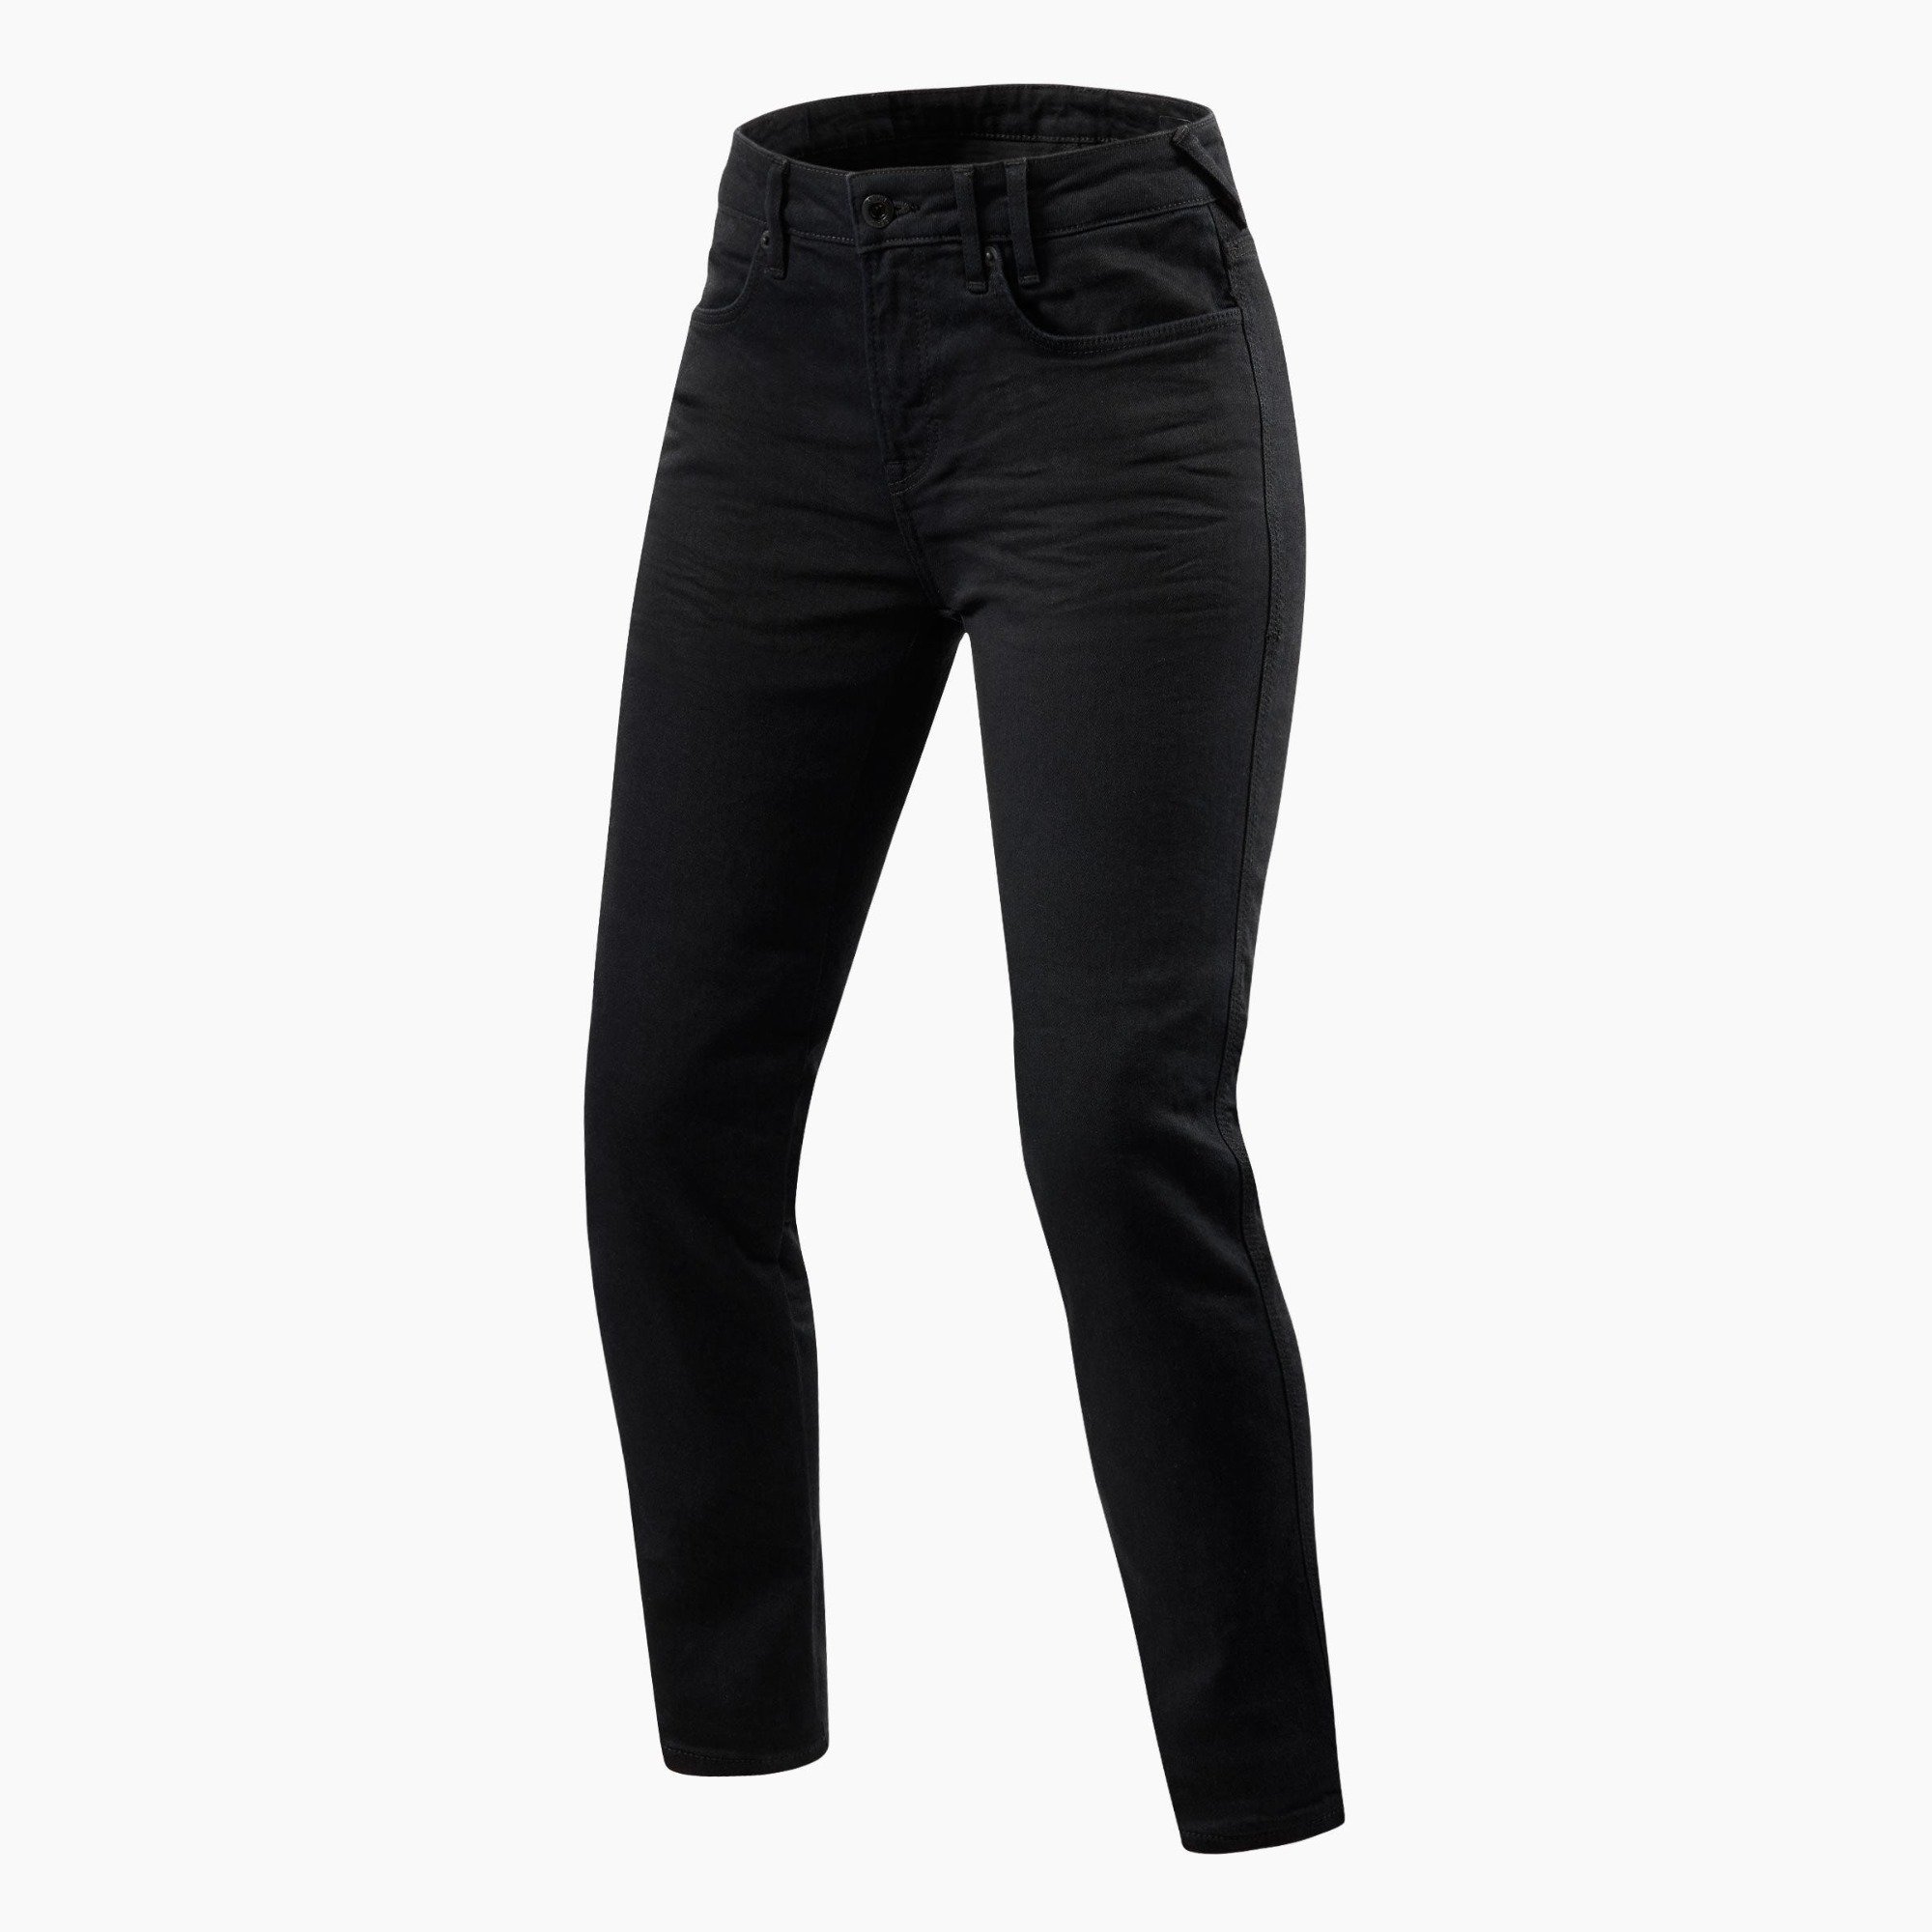 Image of REV'IT! Jeans Maple 2 Ladies SK Black Motorcycle Jeans Size L32/W34 EN